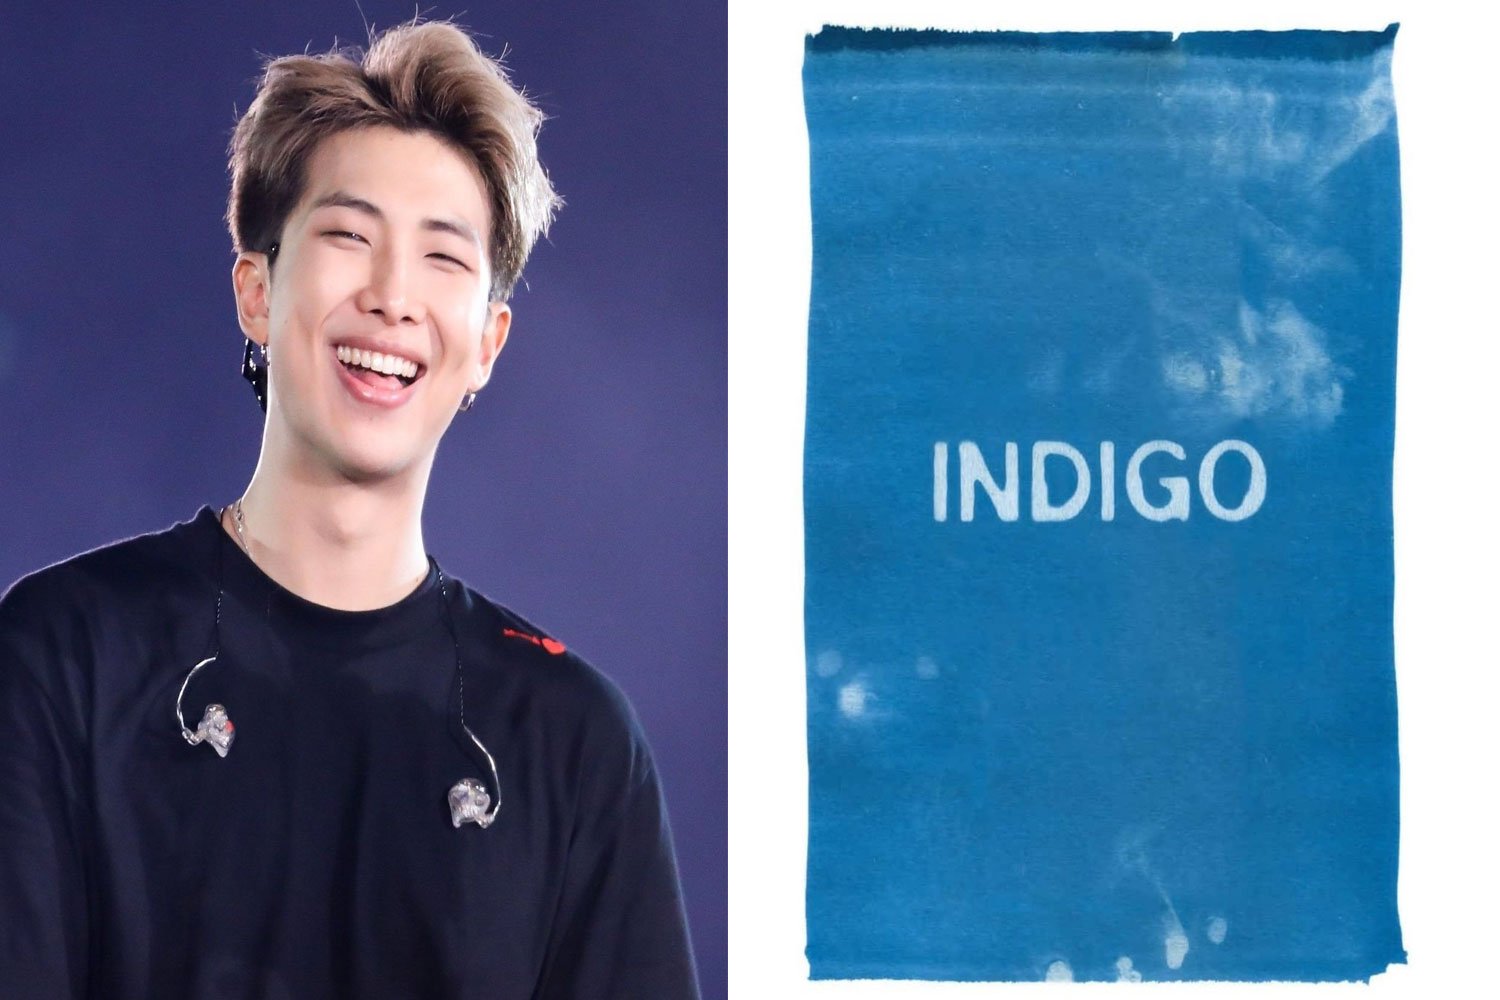 BTS RM upcoming album ‘Indigo’ full track list out now